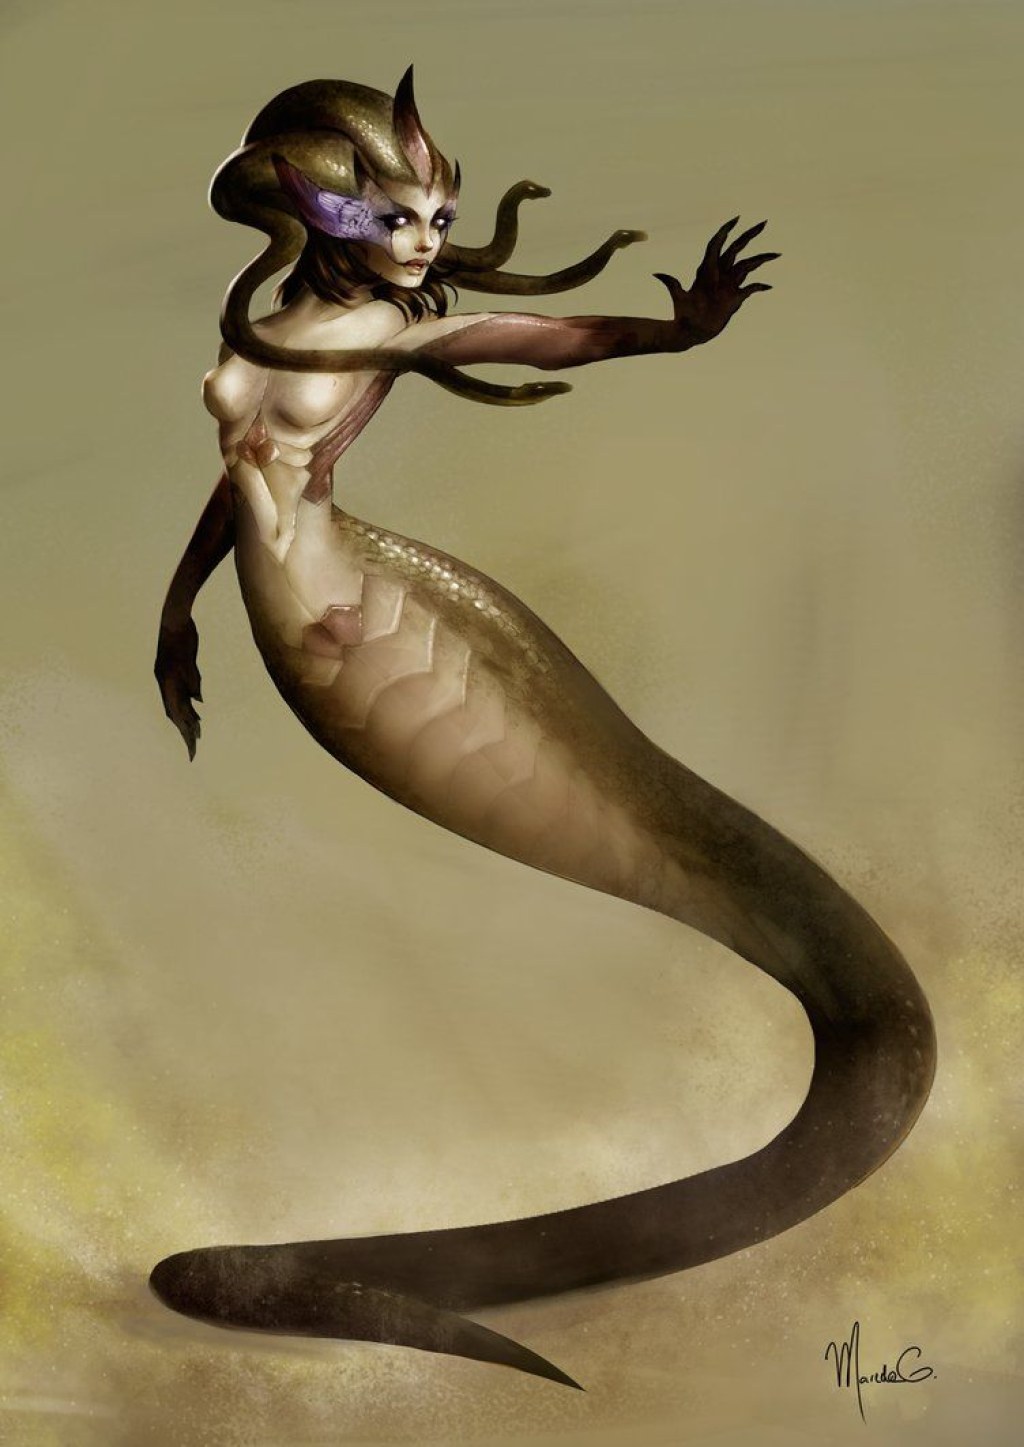 medusa concept art - Medusa - Concept Art  Medusa art, Greek mythological creatures